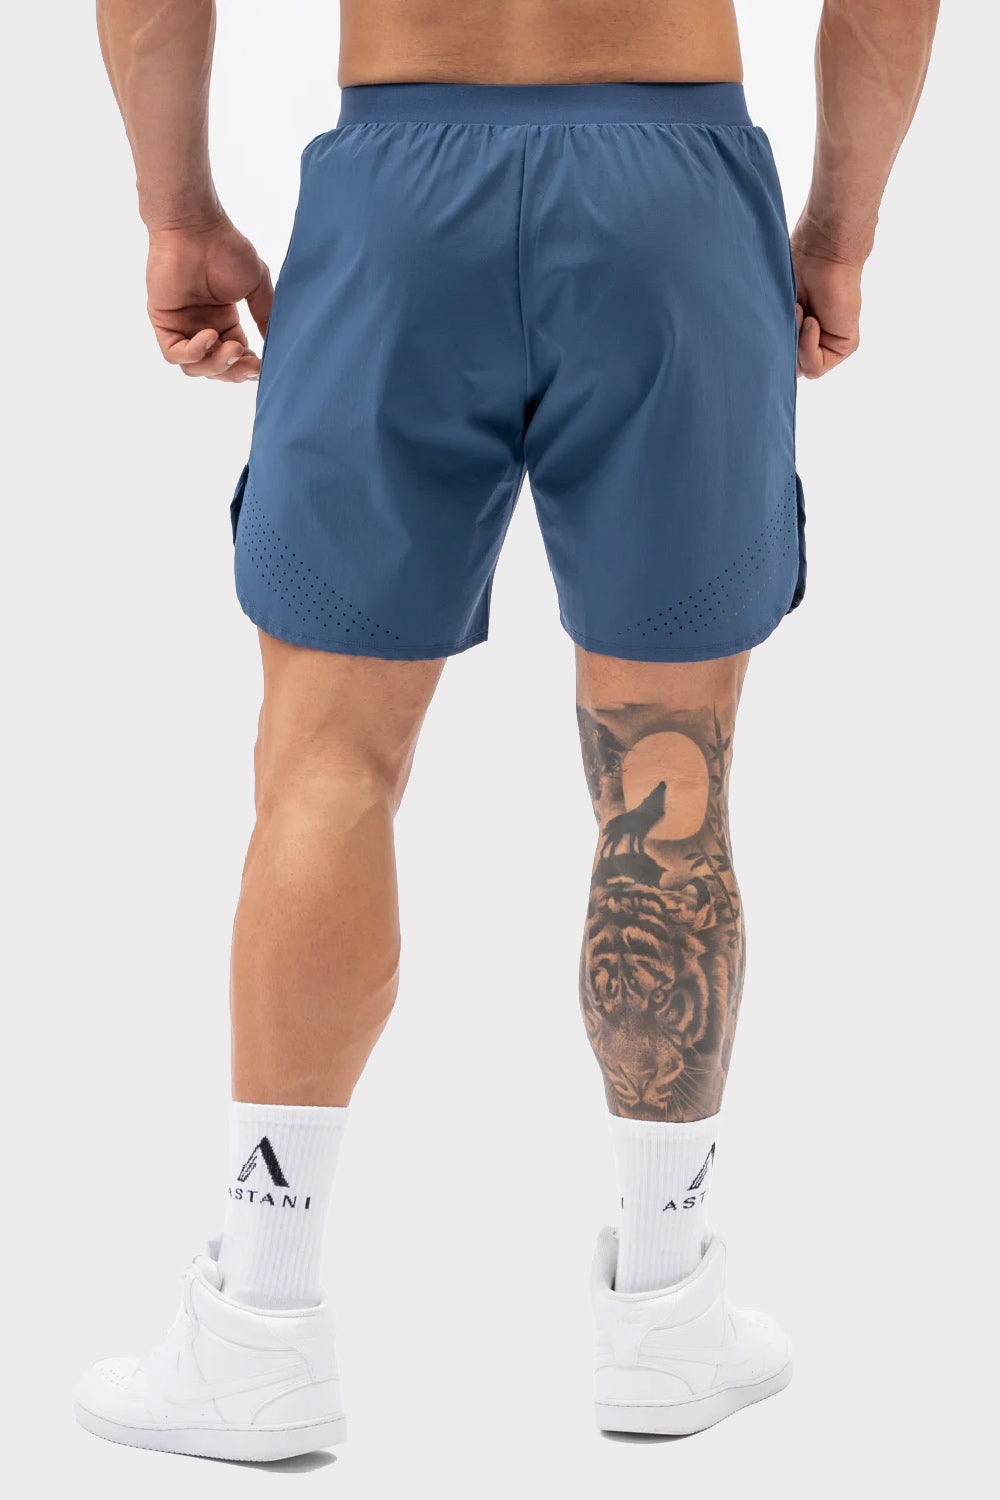 A VELOCE Shorts - Azul     